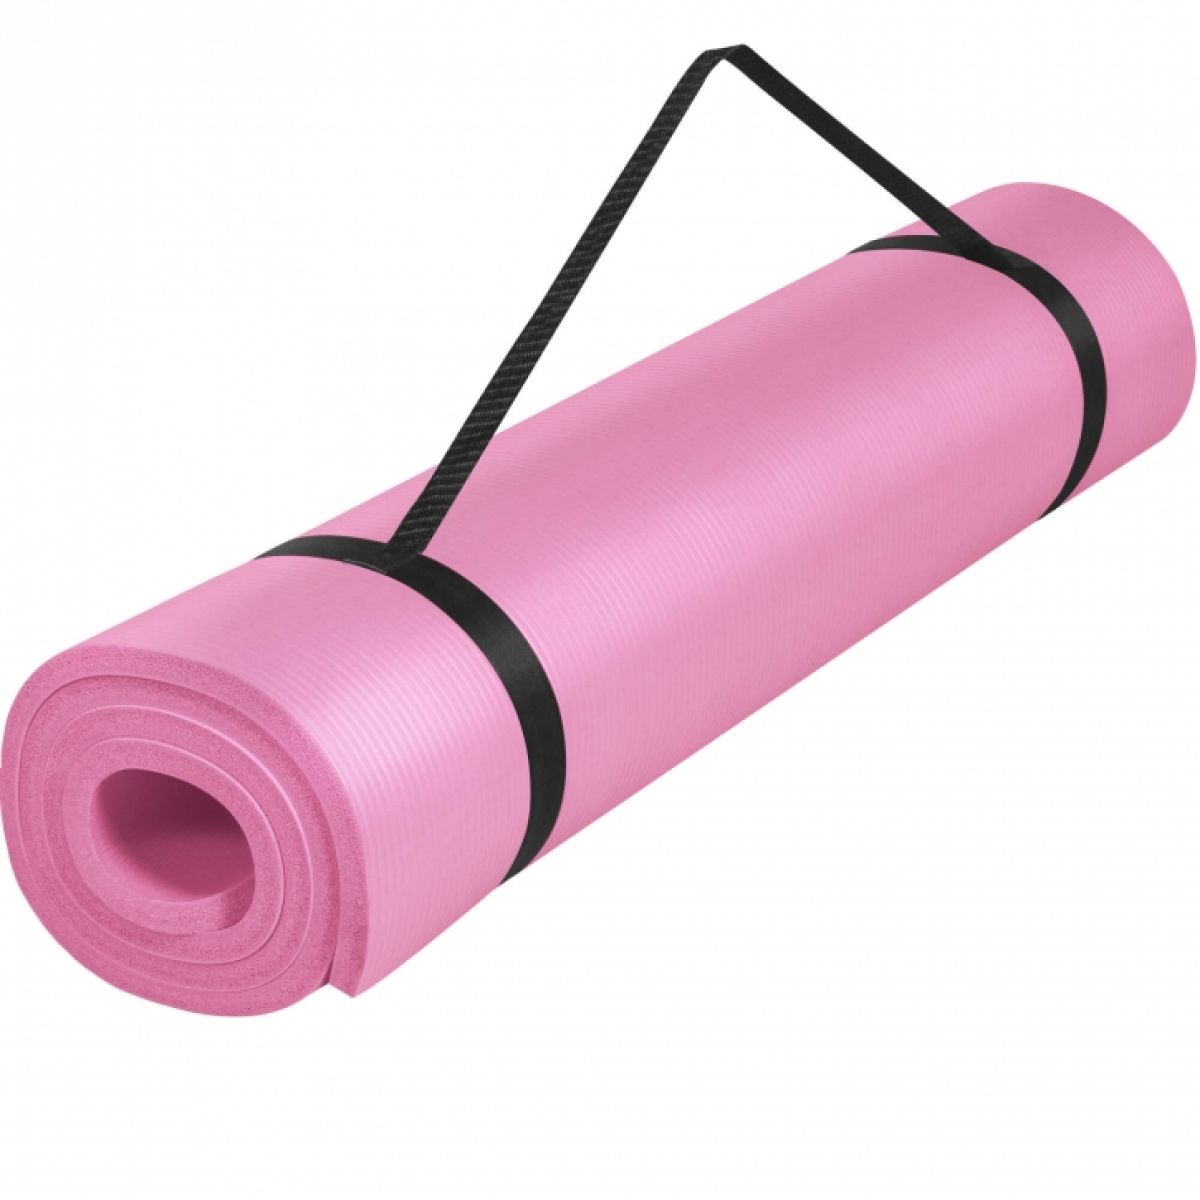 Roze - Yogamat Deluxe 190 x 60 x 1,5 cm